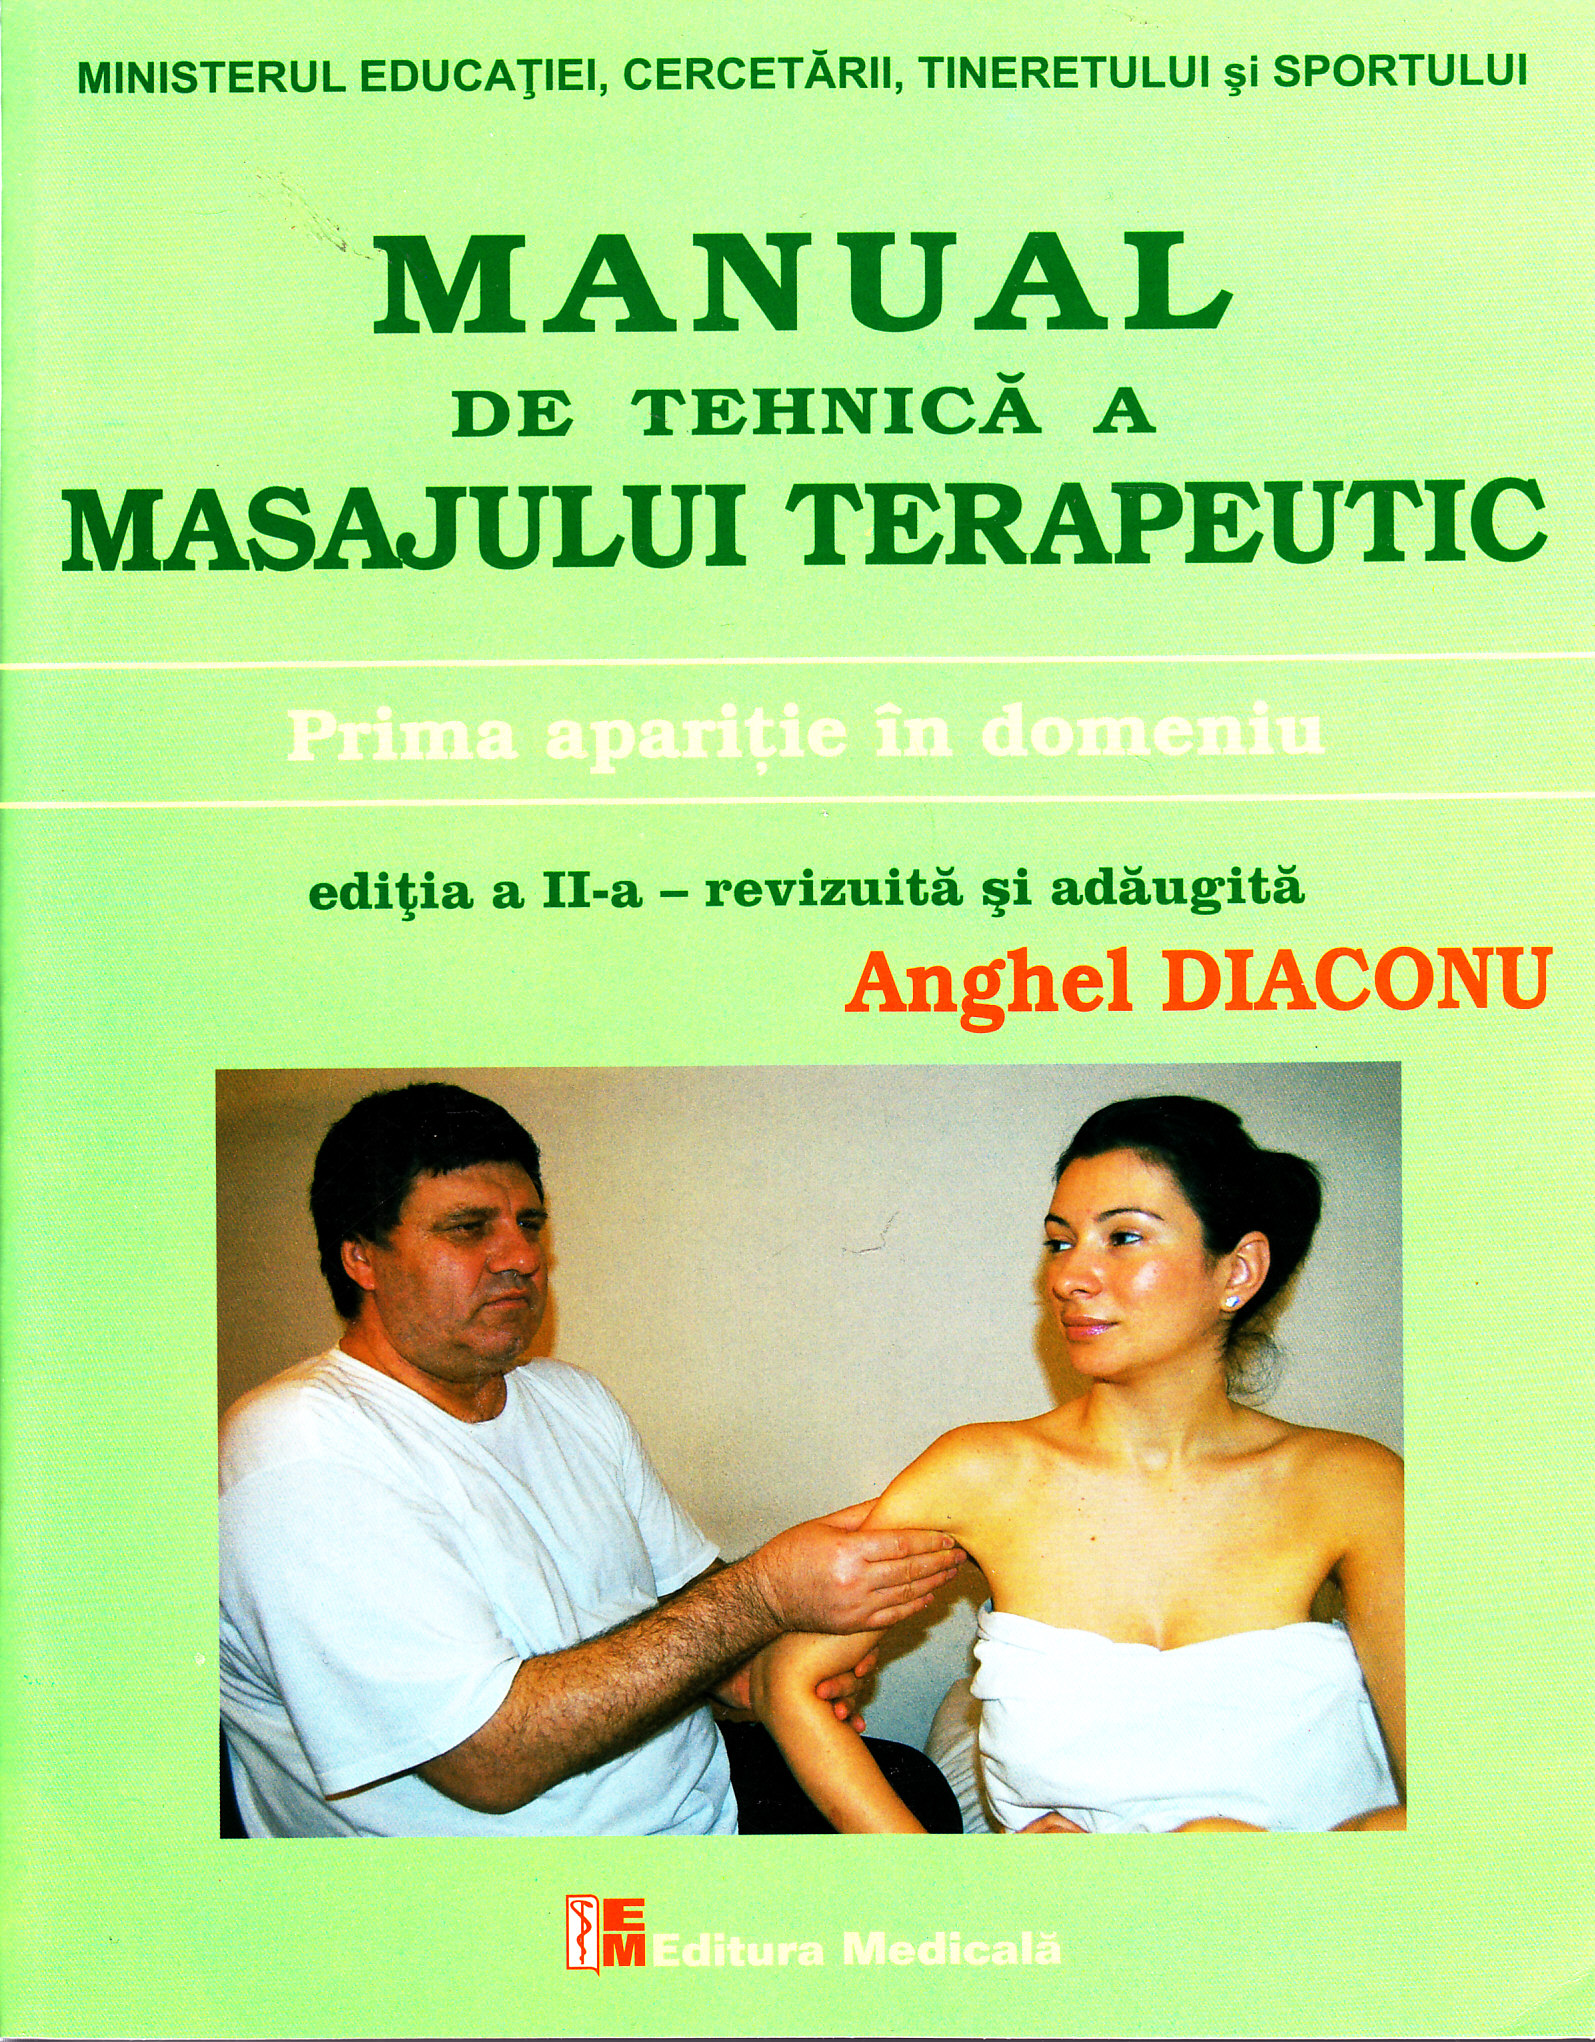 Manual de tehnica a masajului terapeutic ed.2 (necartonat) - Anghel Diaconu